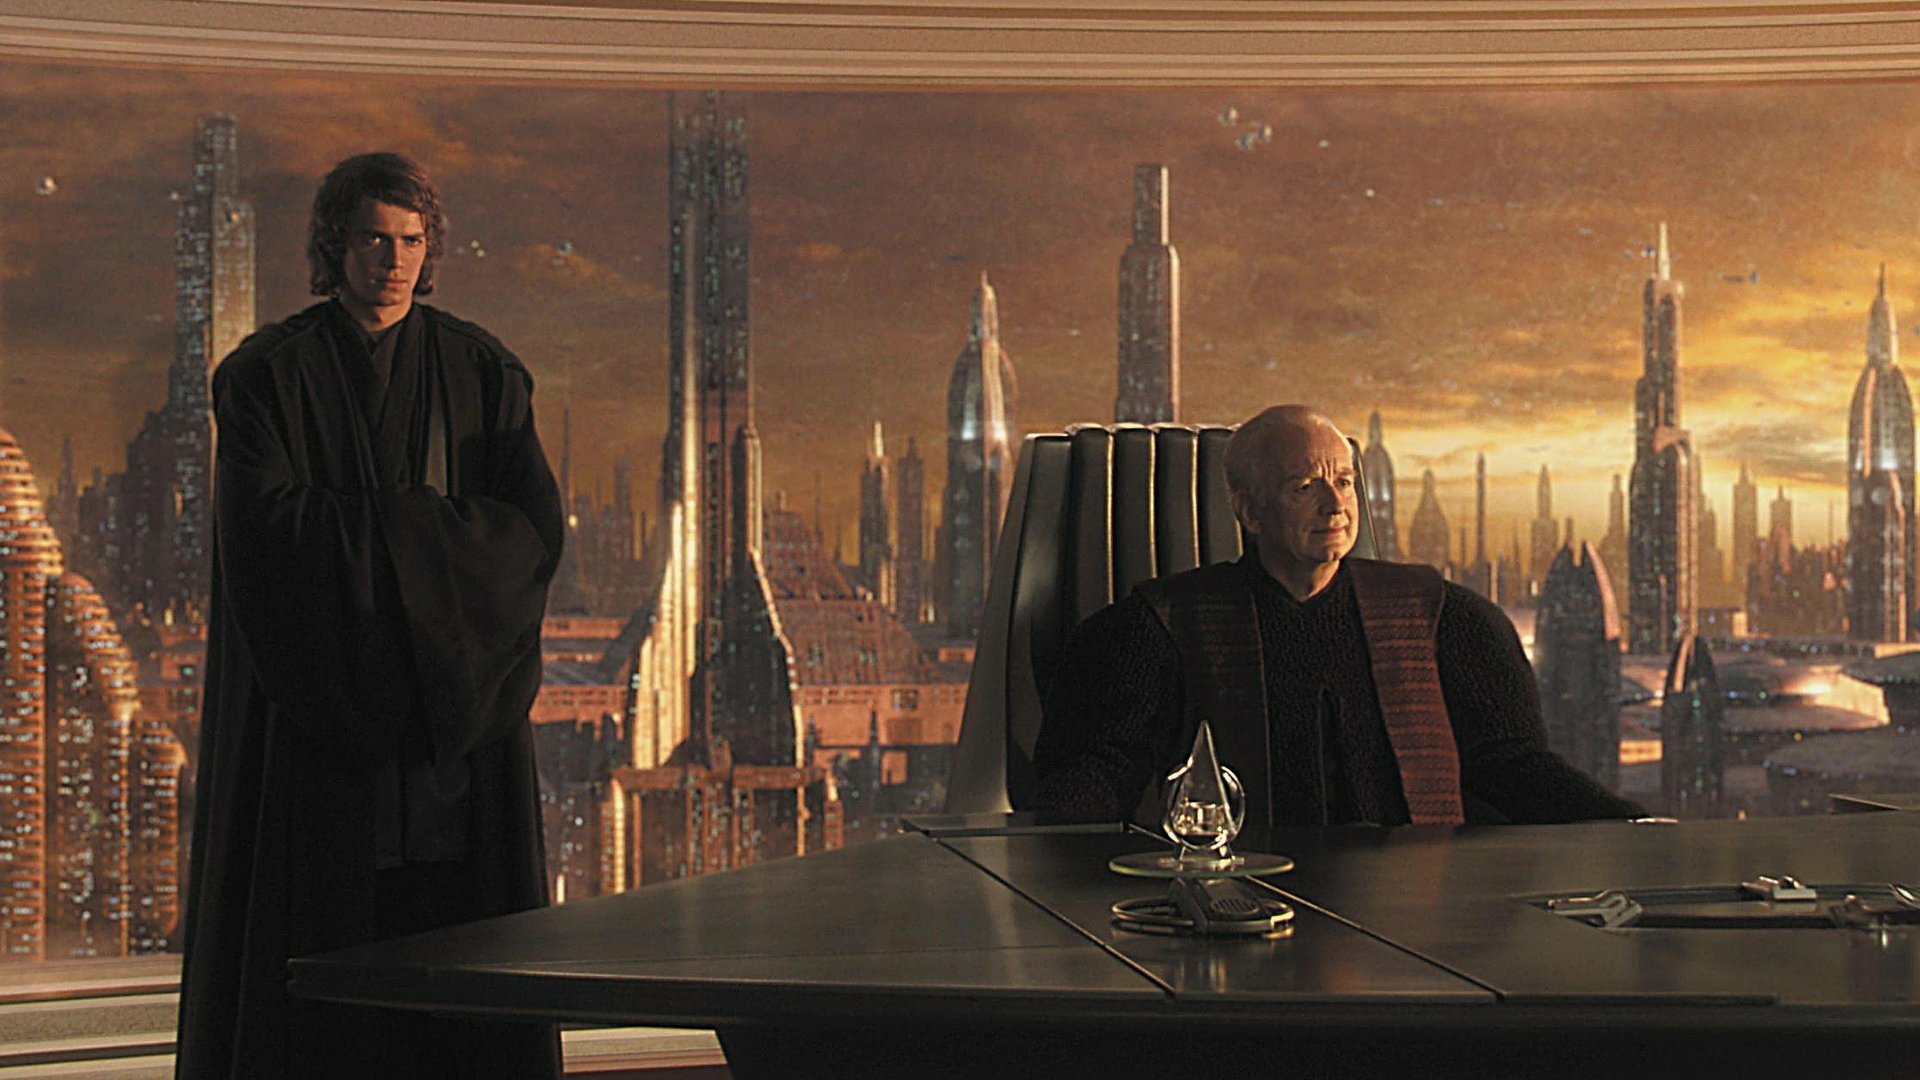 Star Wars Episode III: Revenge of the Sith HD Wallpaper